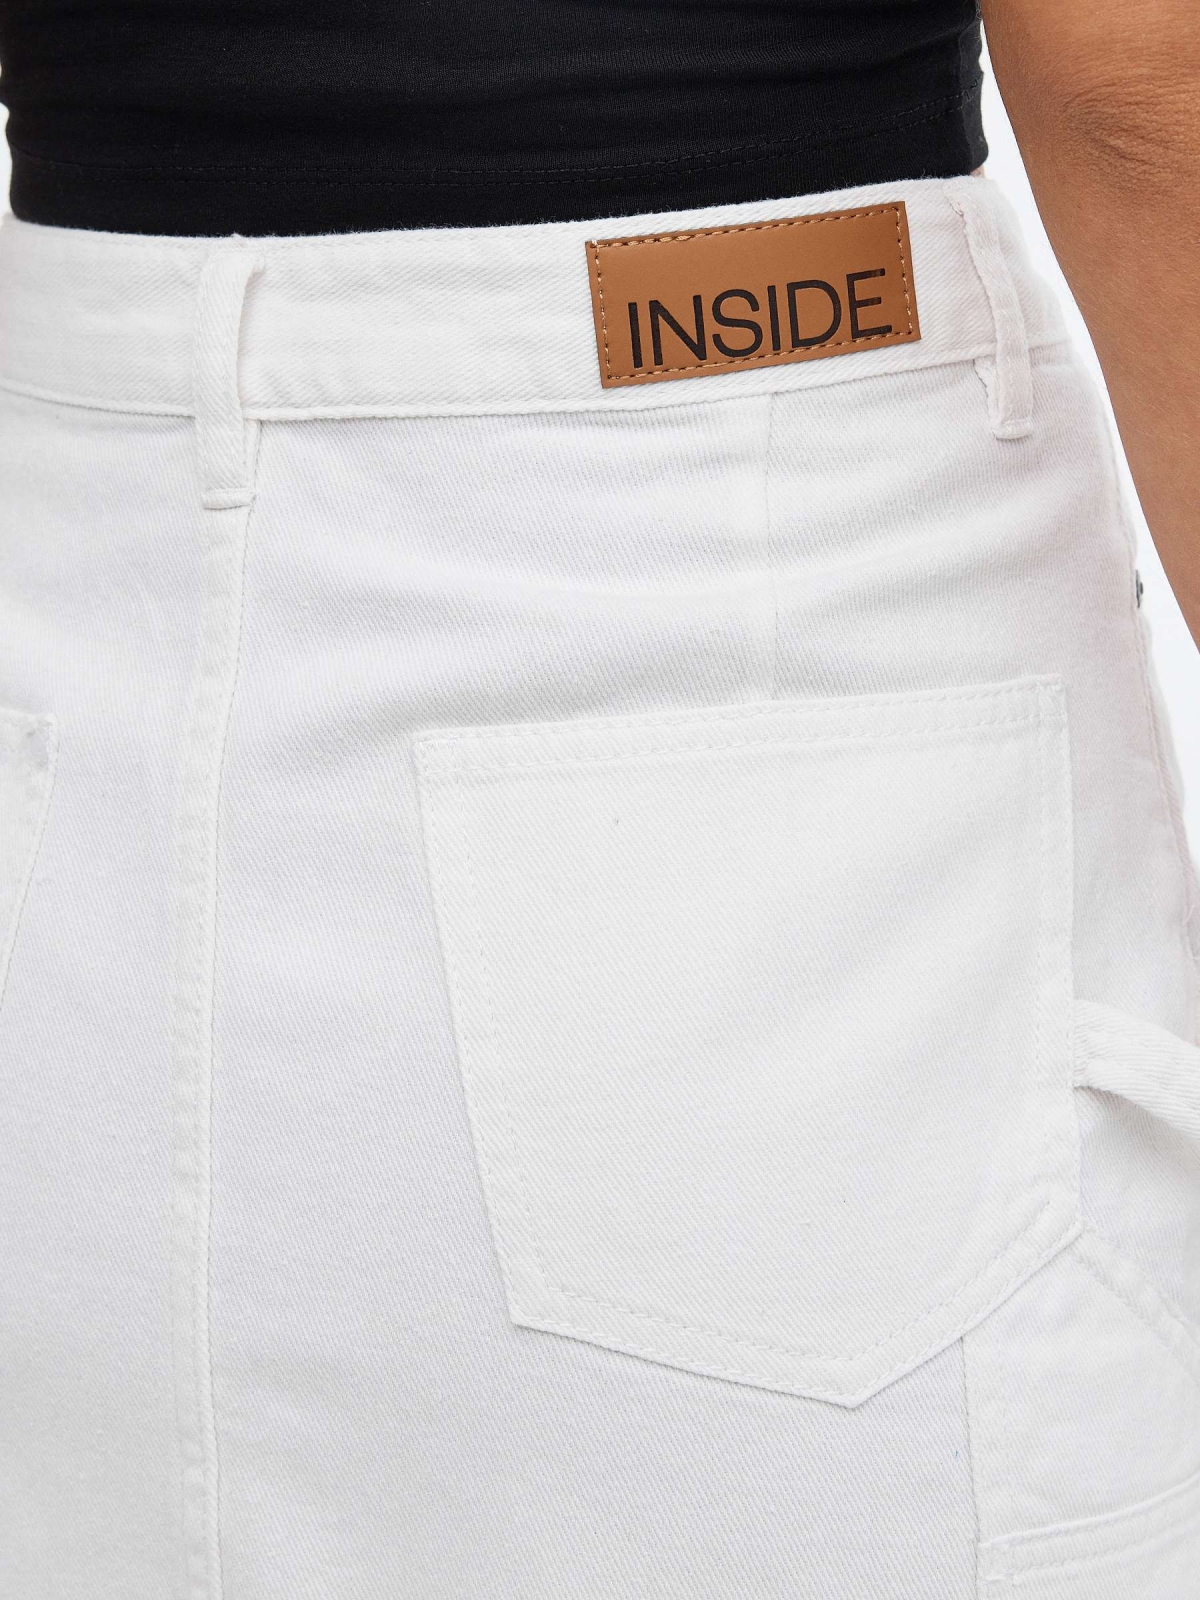 Denim skirt with pleated hem white detail view